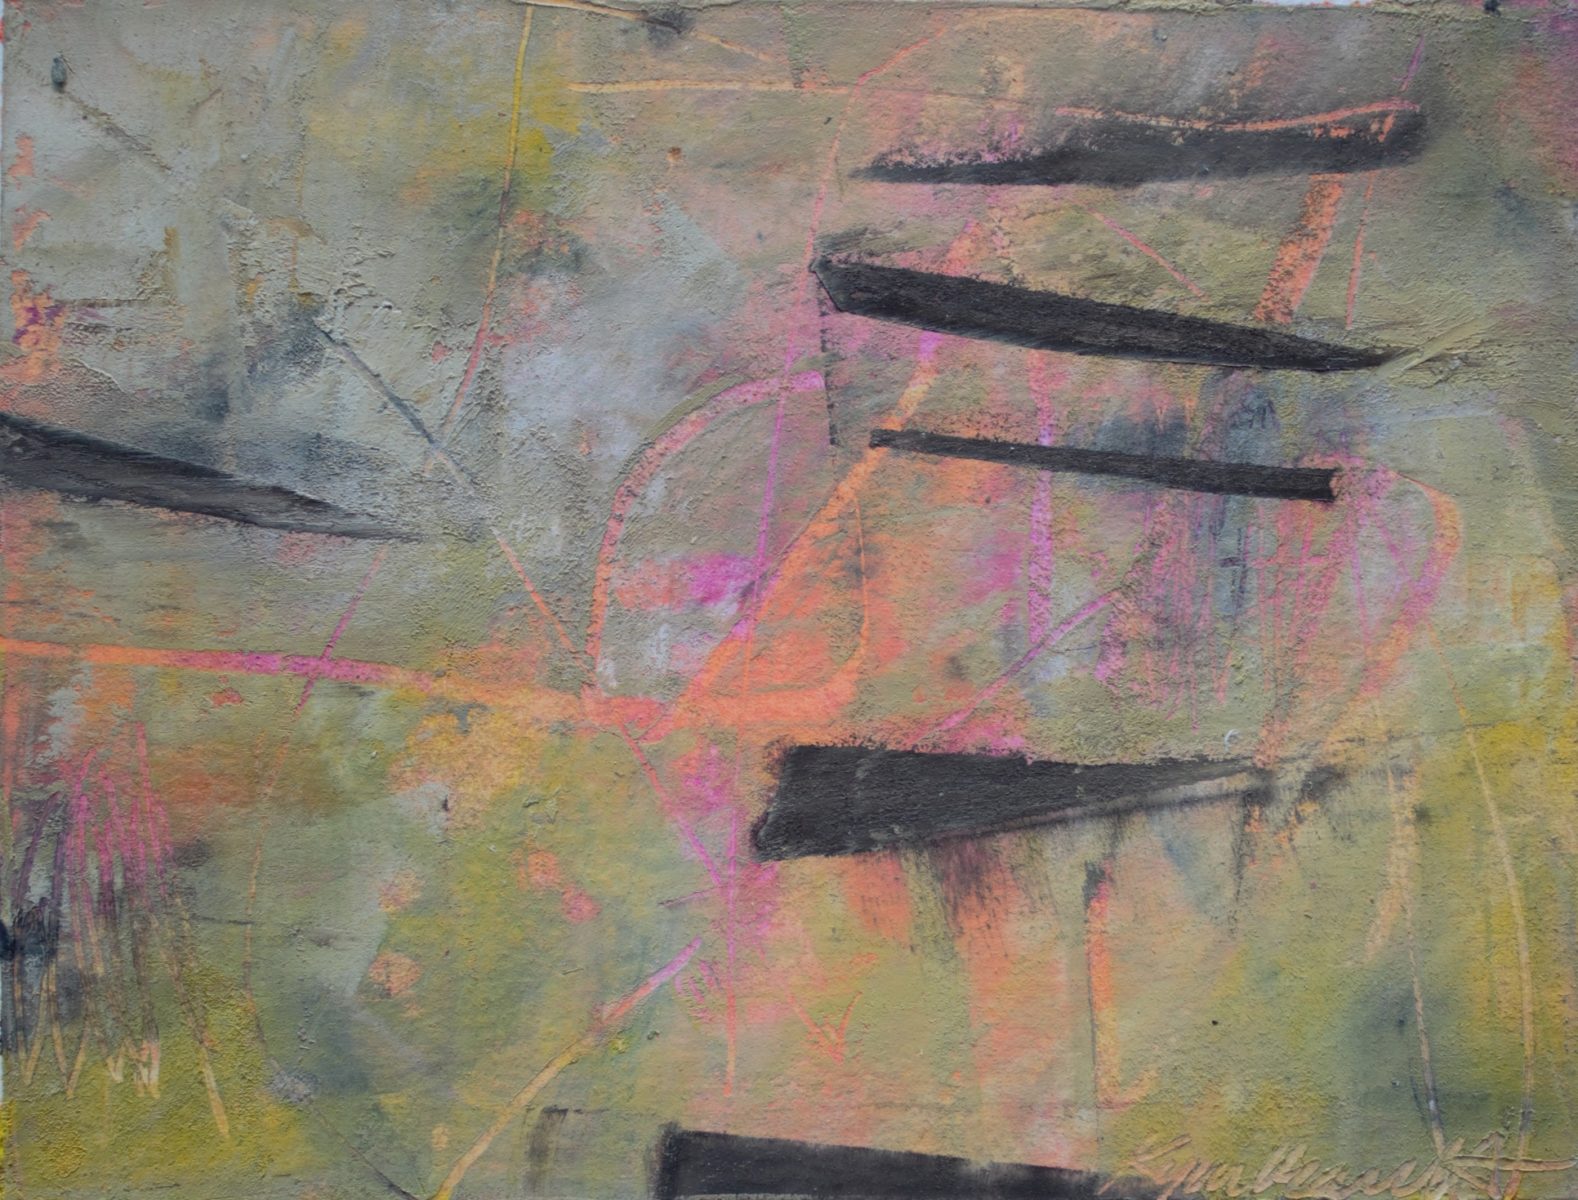 Steps II | Kym Barrett | Oils, cold wax medium on Arches paper | 47 x 39 cm framed in black | $580